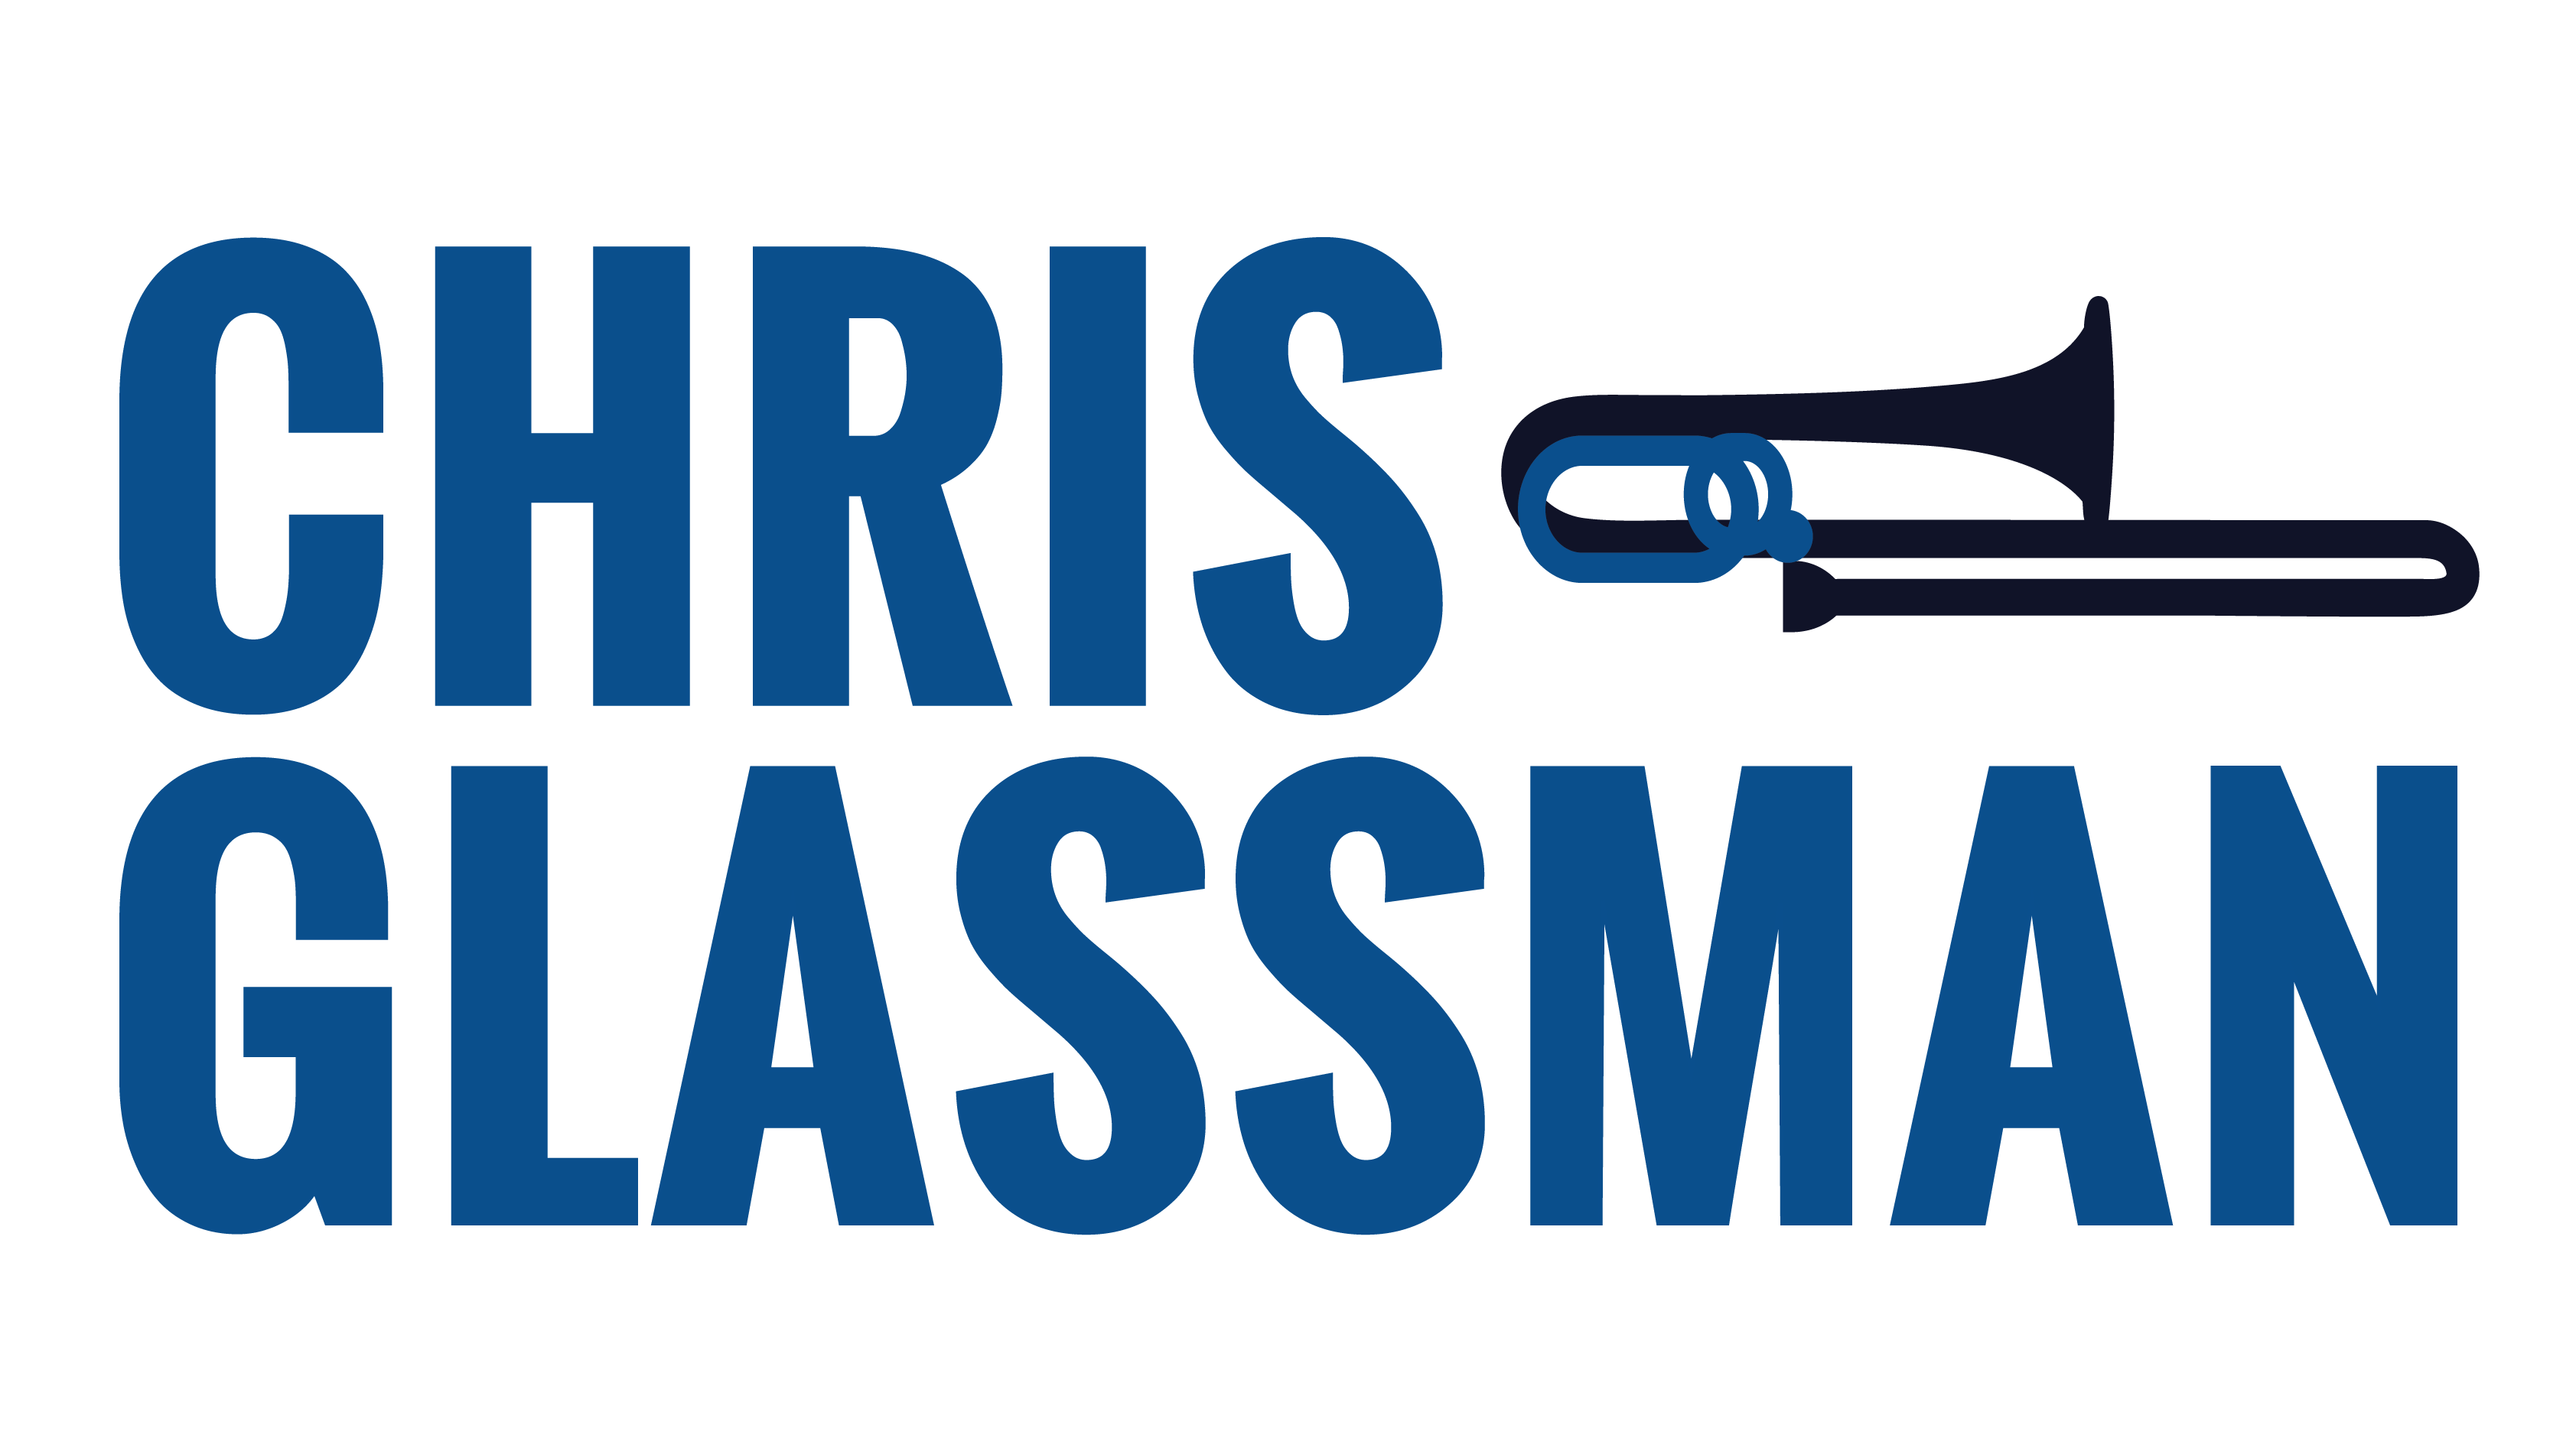 Chris Glassman